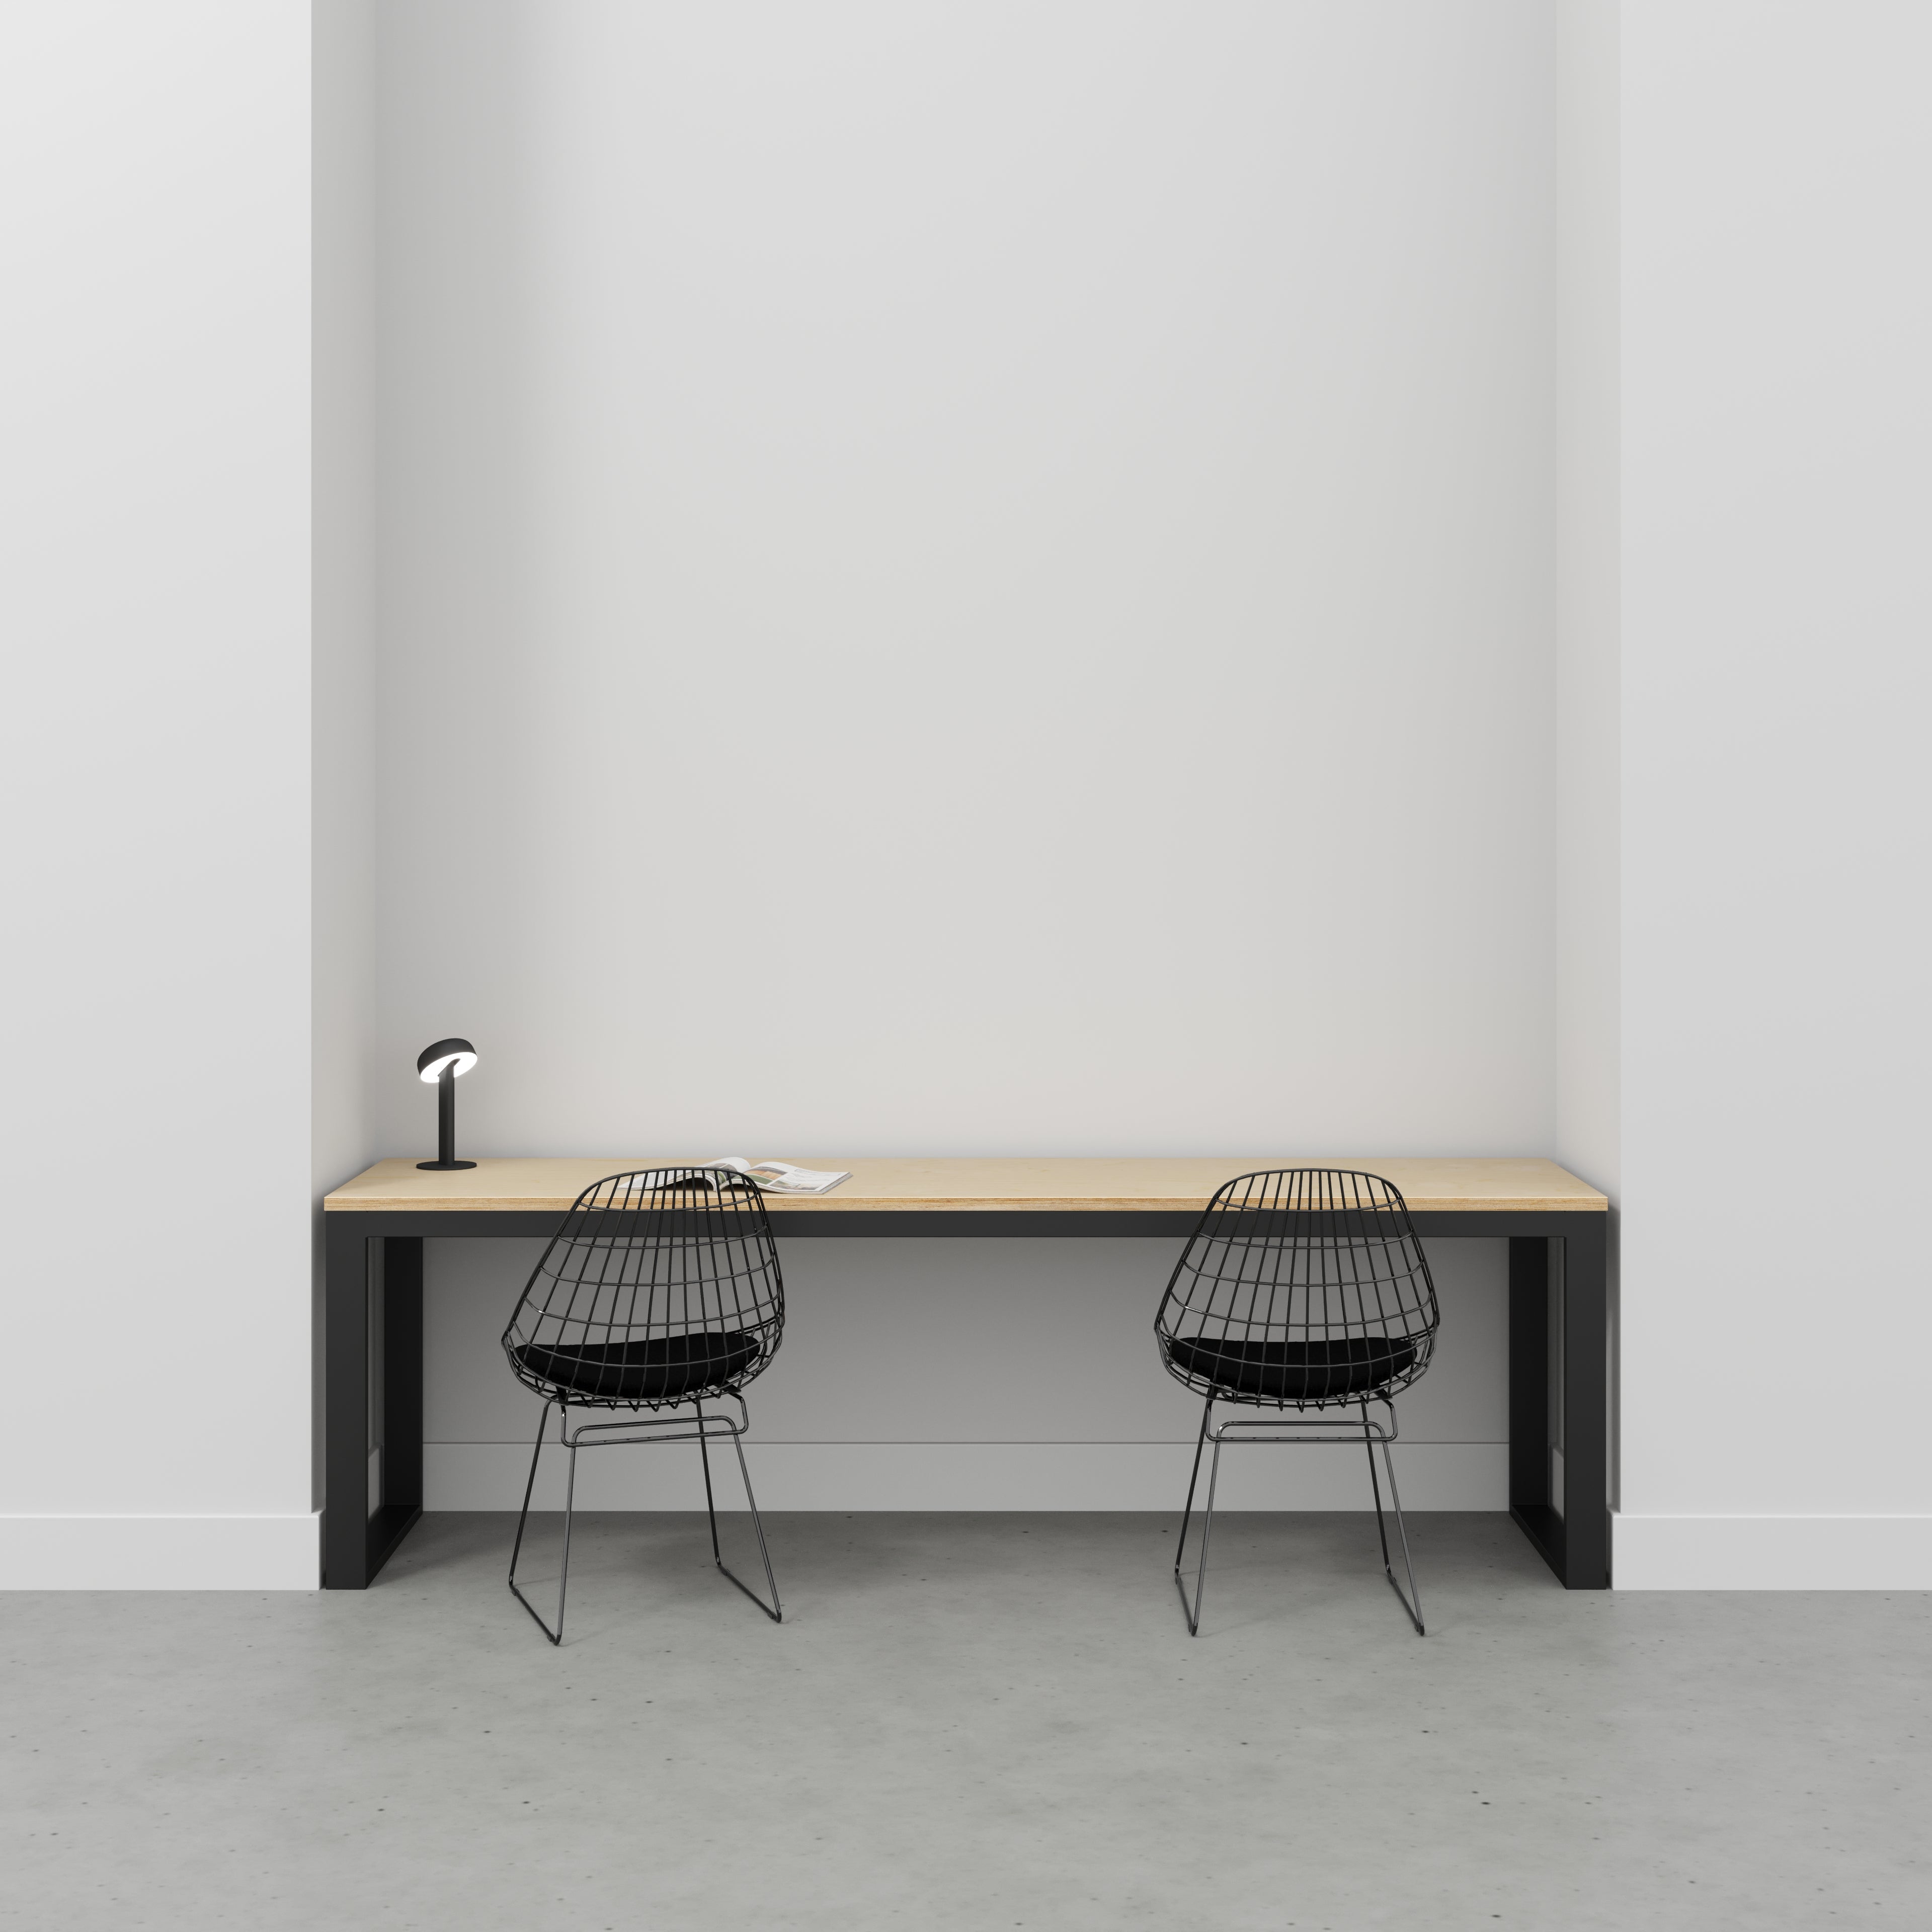 Desk with Black Industrial Frame - Plywood Birch - 2400(w) x 585(d) x 735(h)